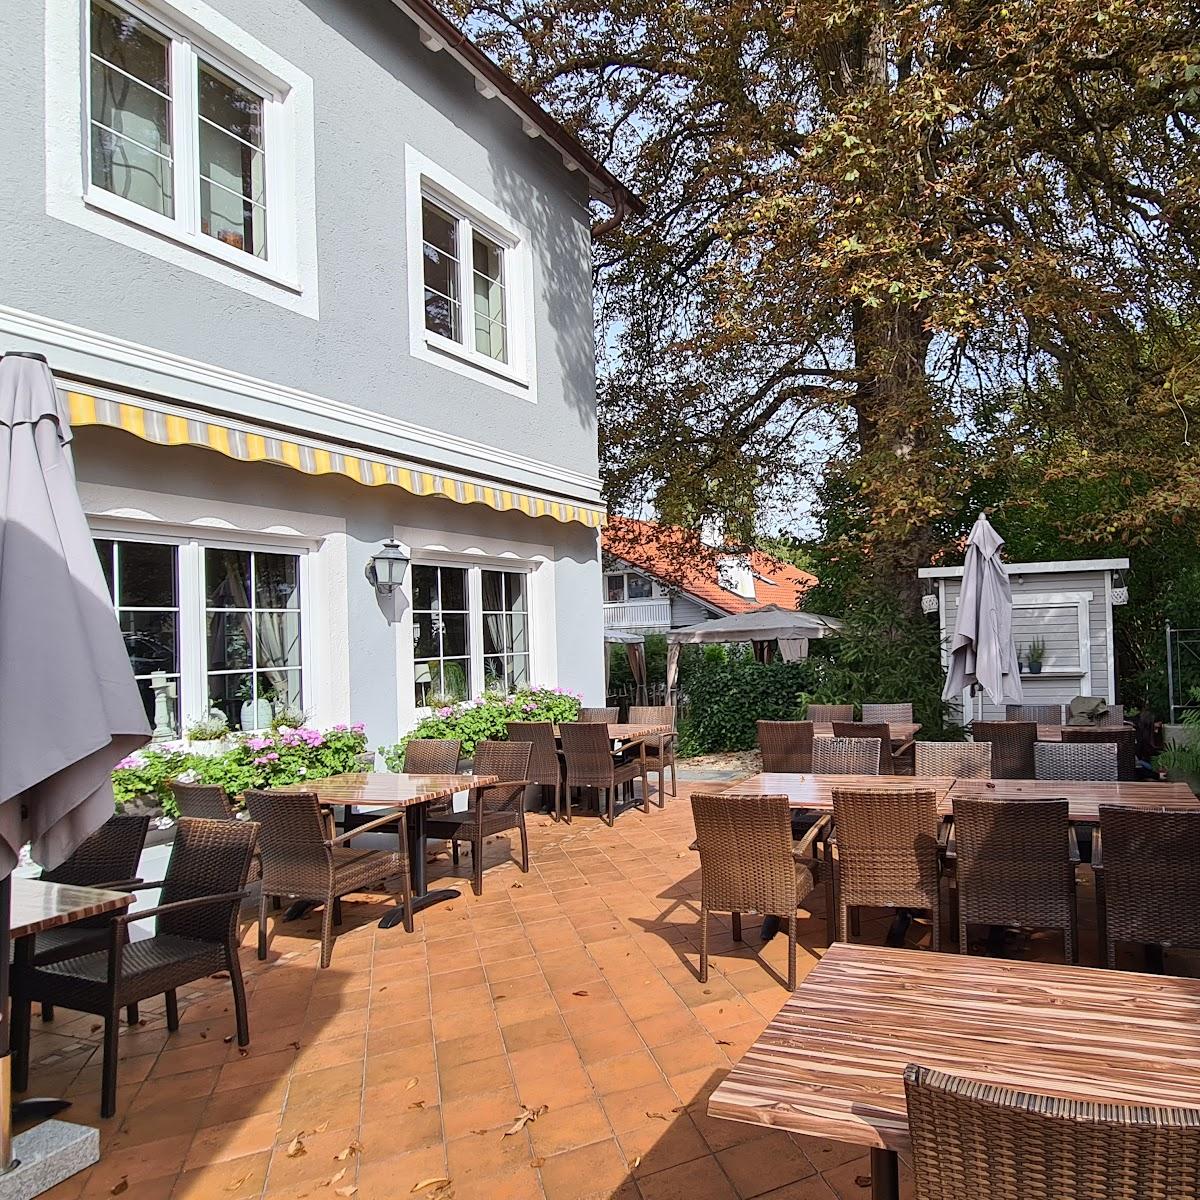 Restaurant "Hotel Rid Ohg" in Kaufering